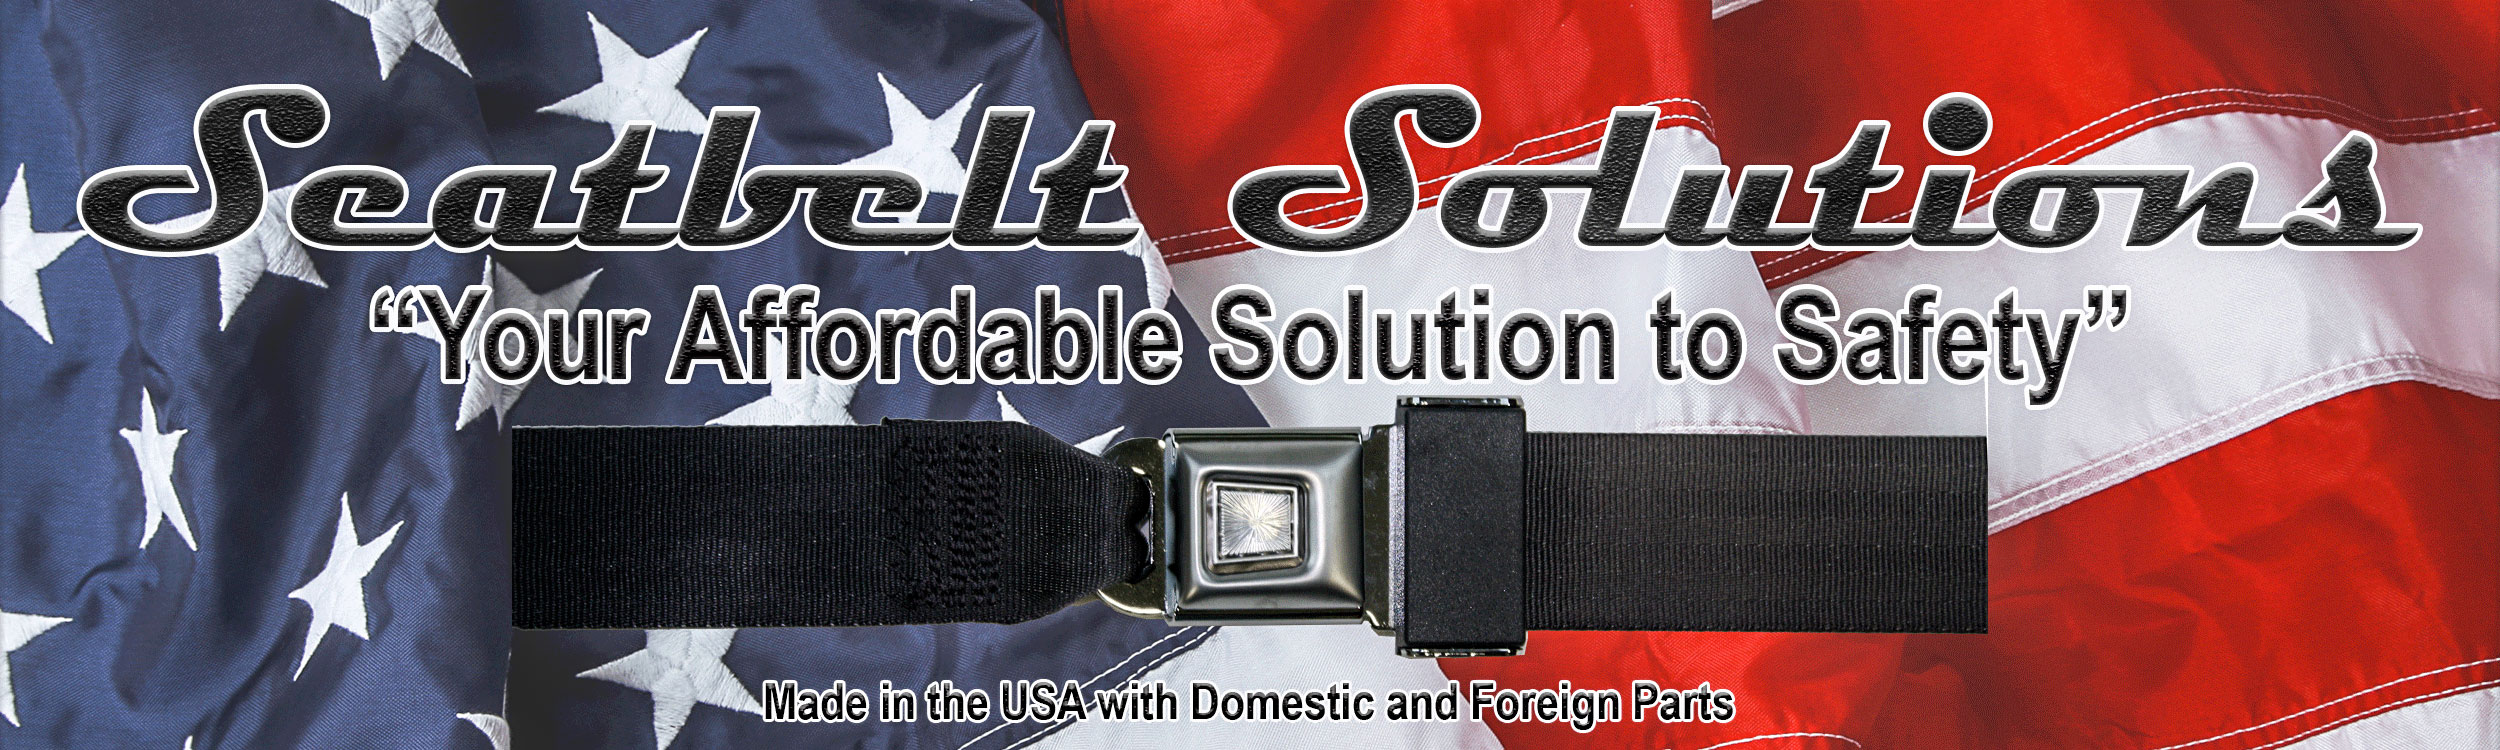 Seatbelt Solutions logo